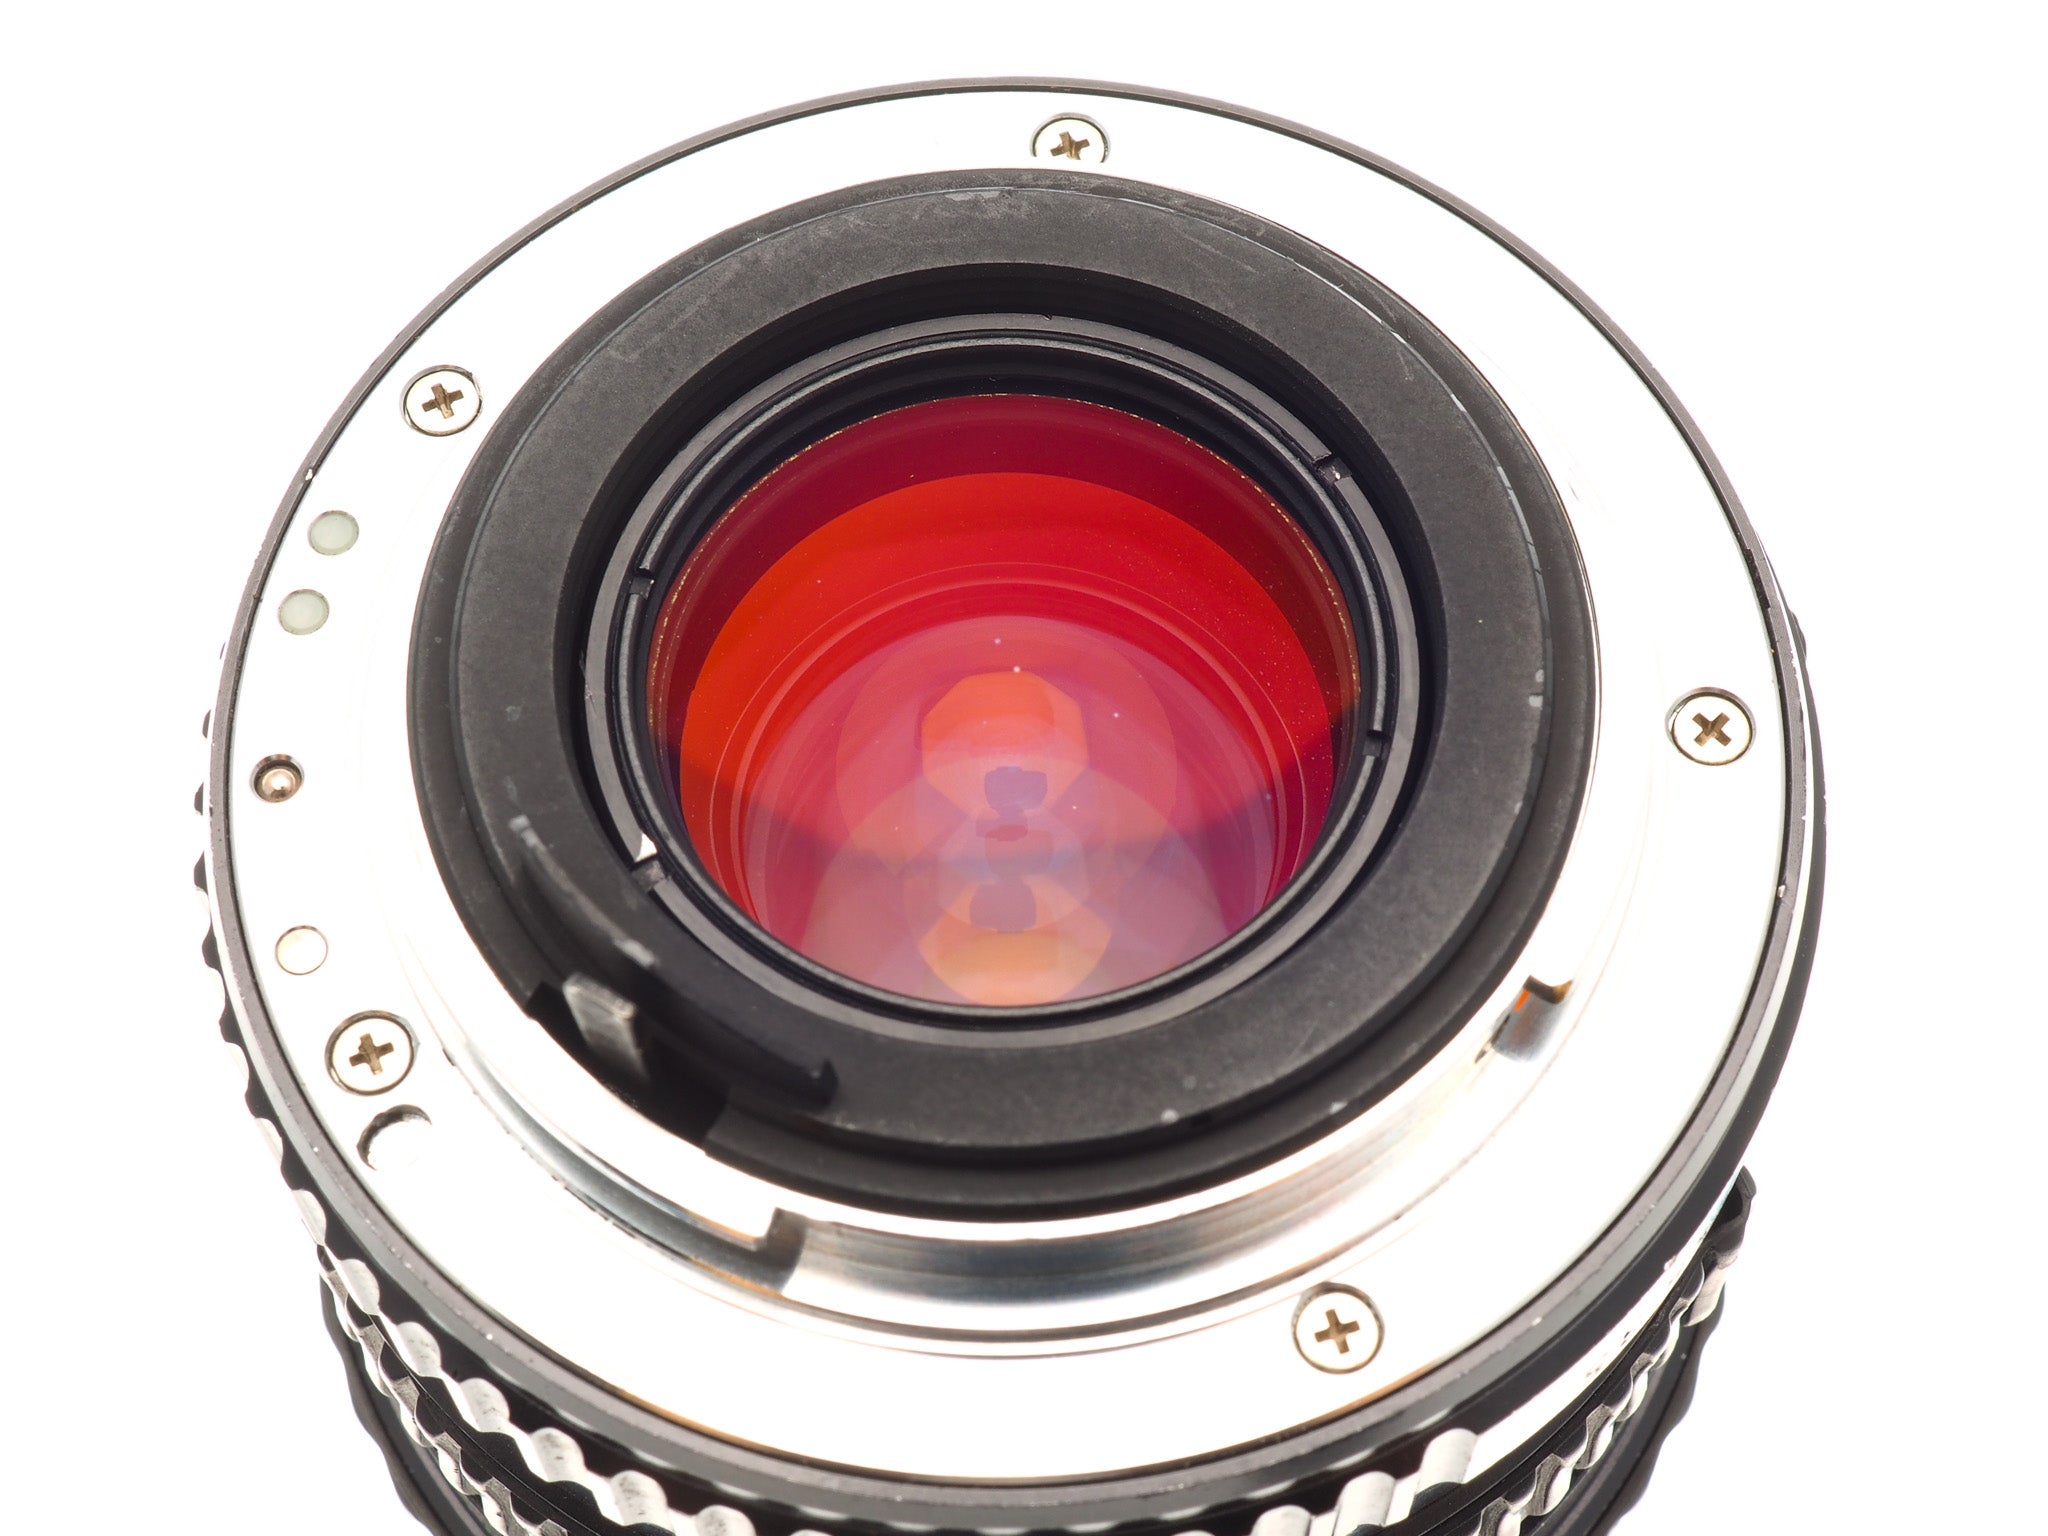 Pentax 35-105mm f3.5 SMC Pentax-A Zoom – Kamerastore